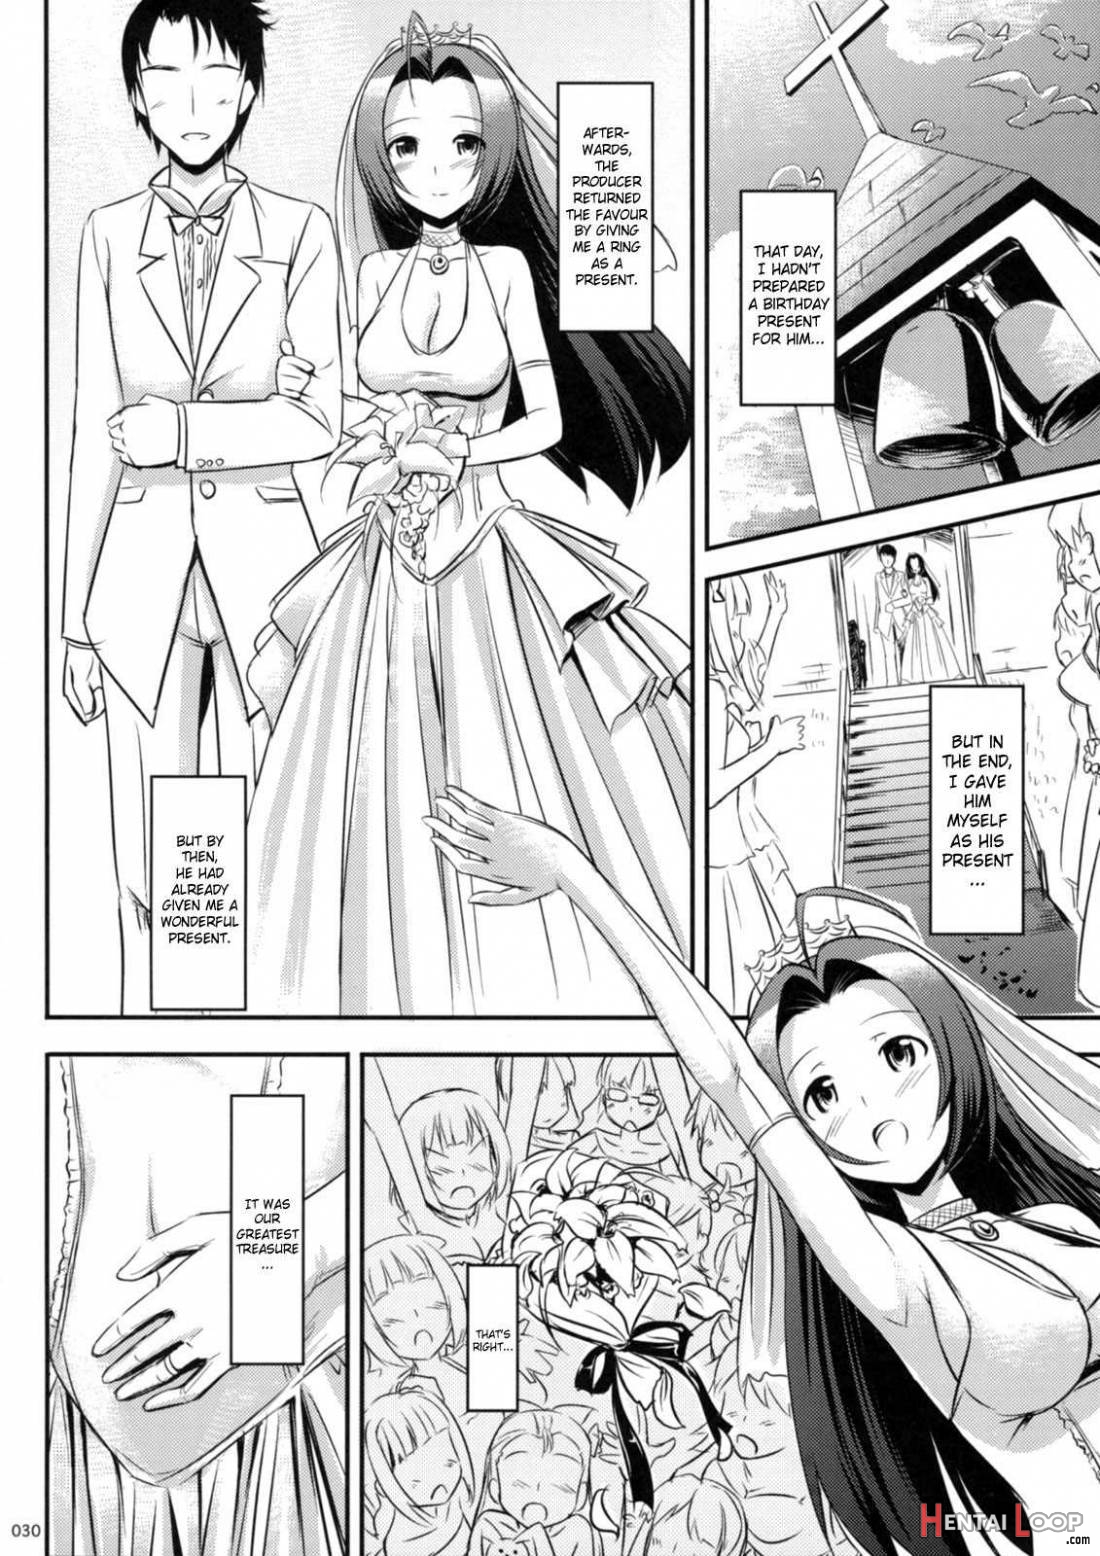 Azusa-san No Present For You! page 30